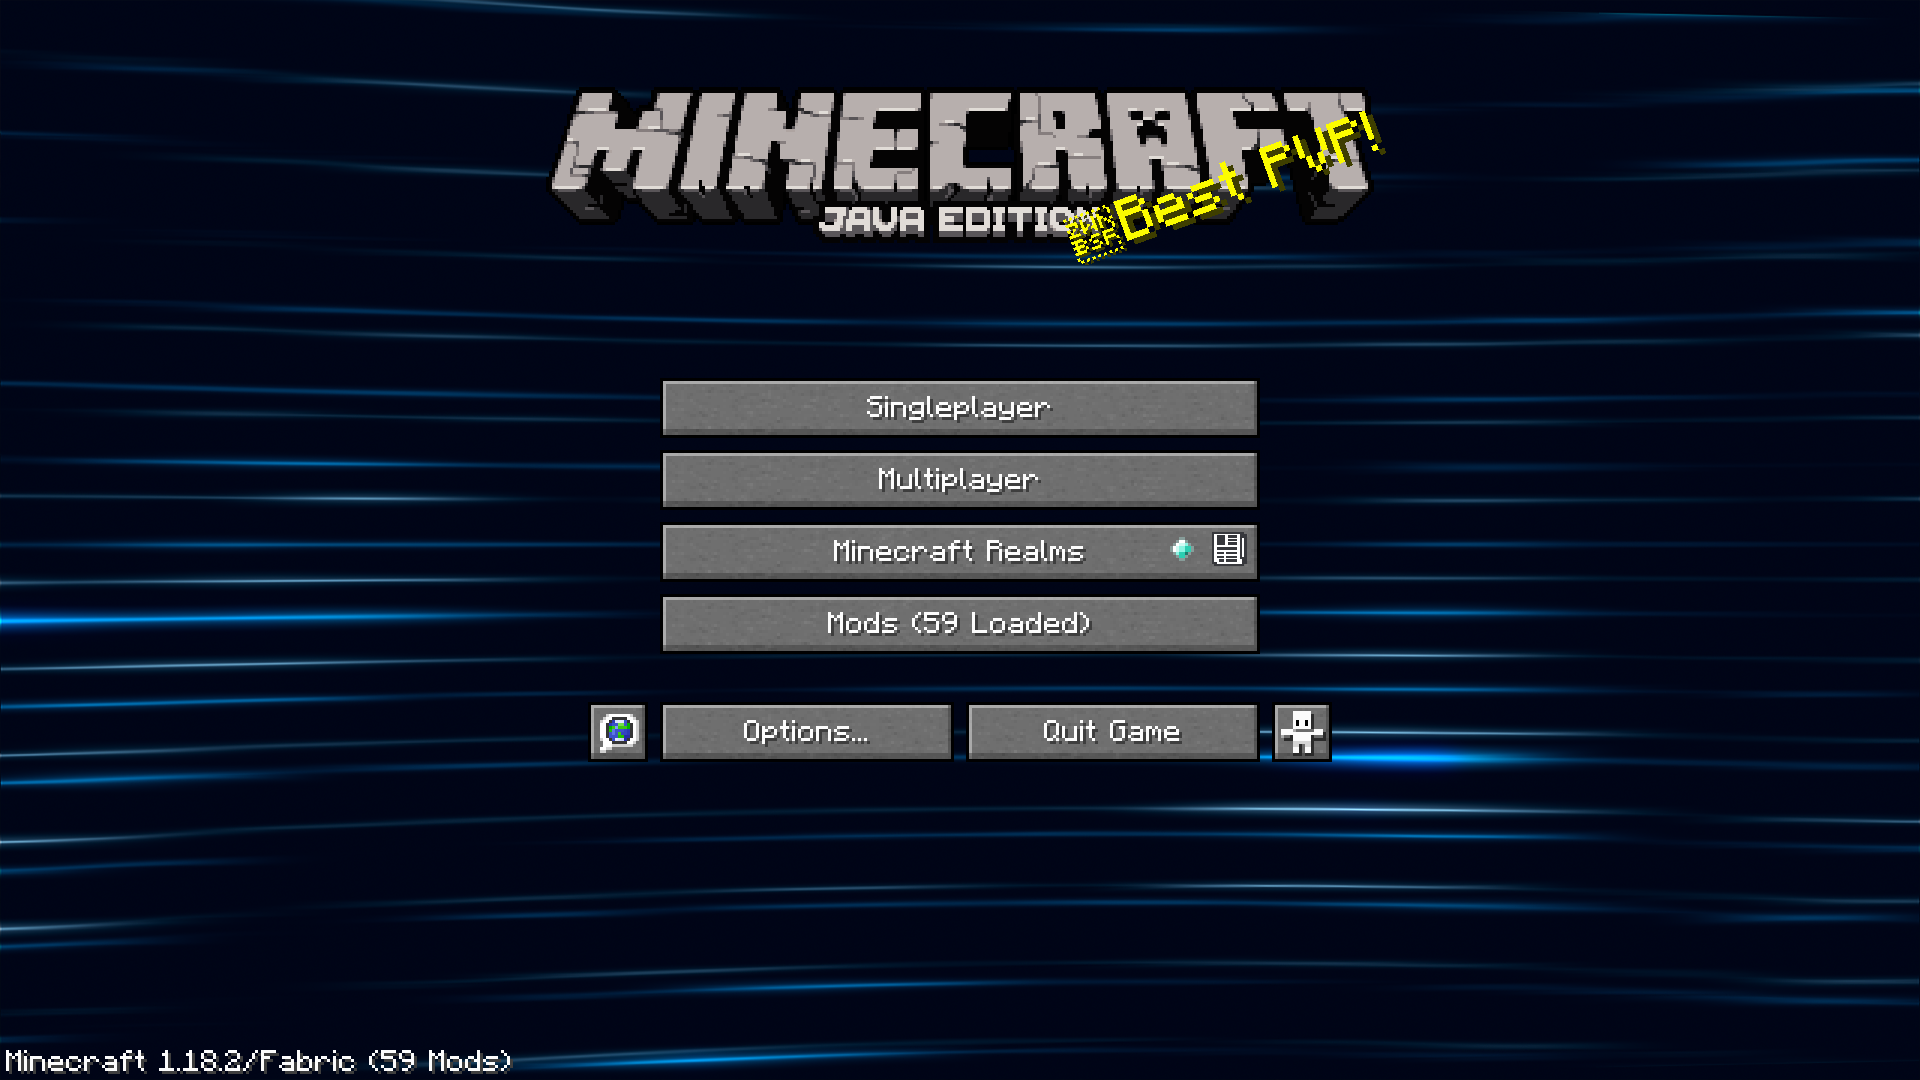 Minecraft 1.18.2 Java Edition Download